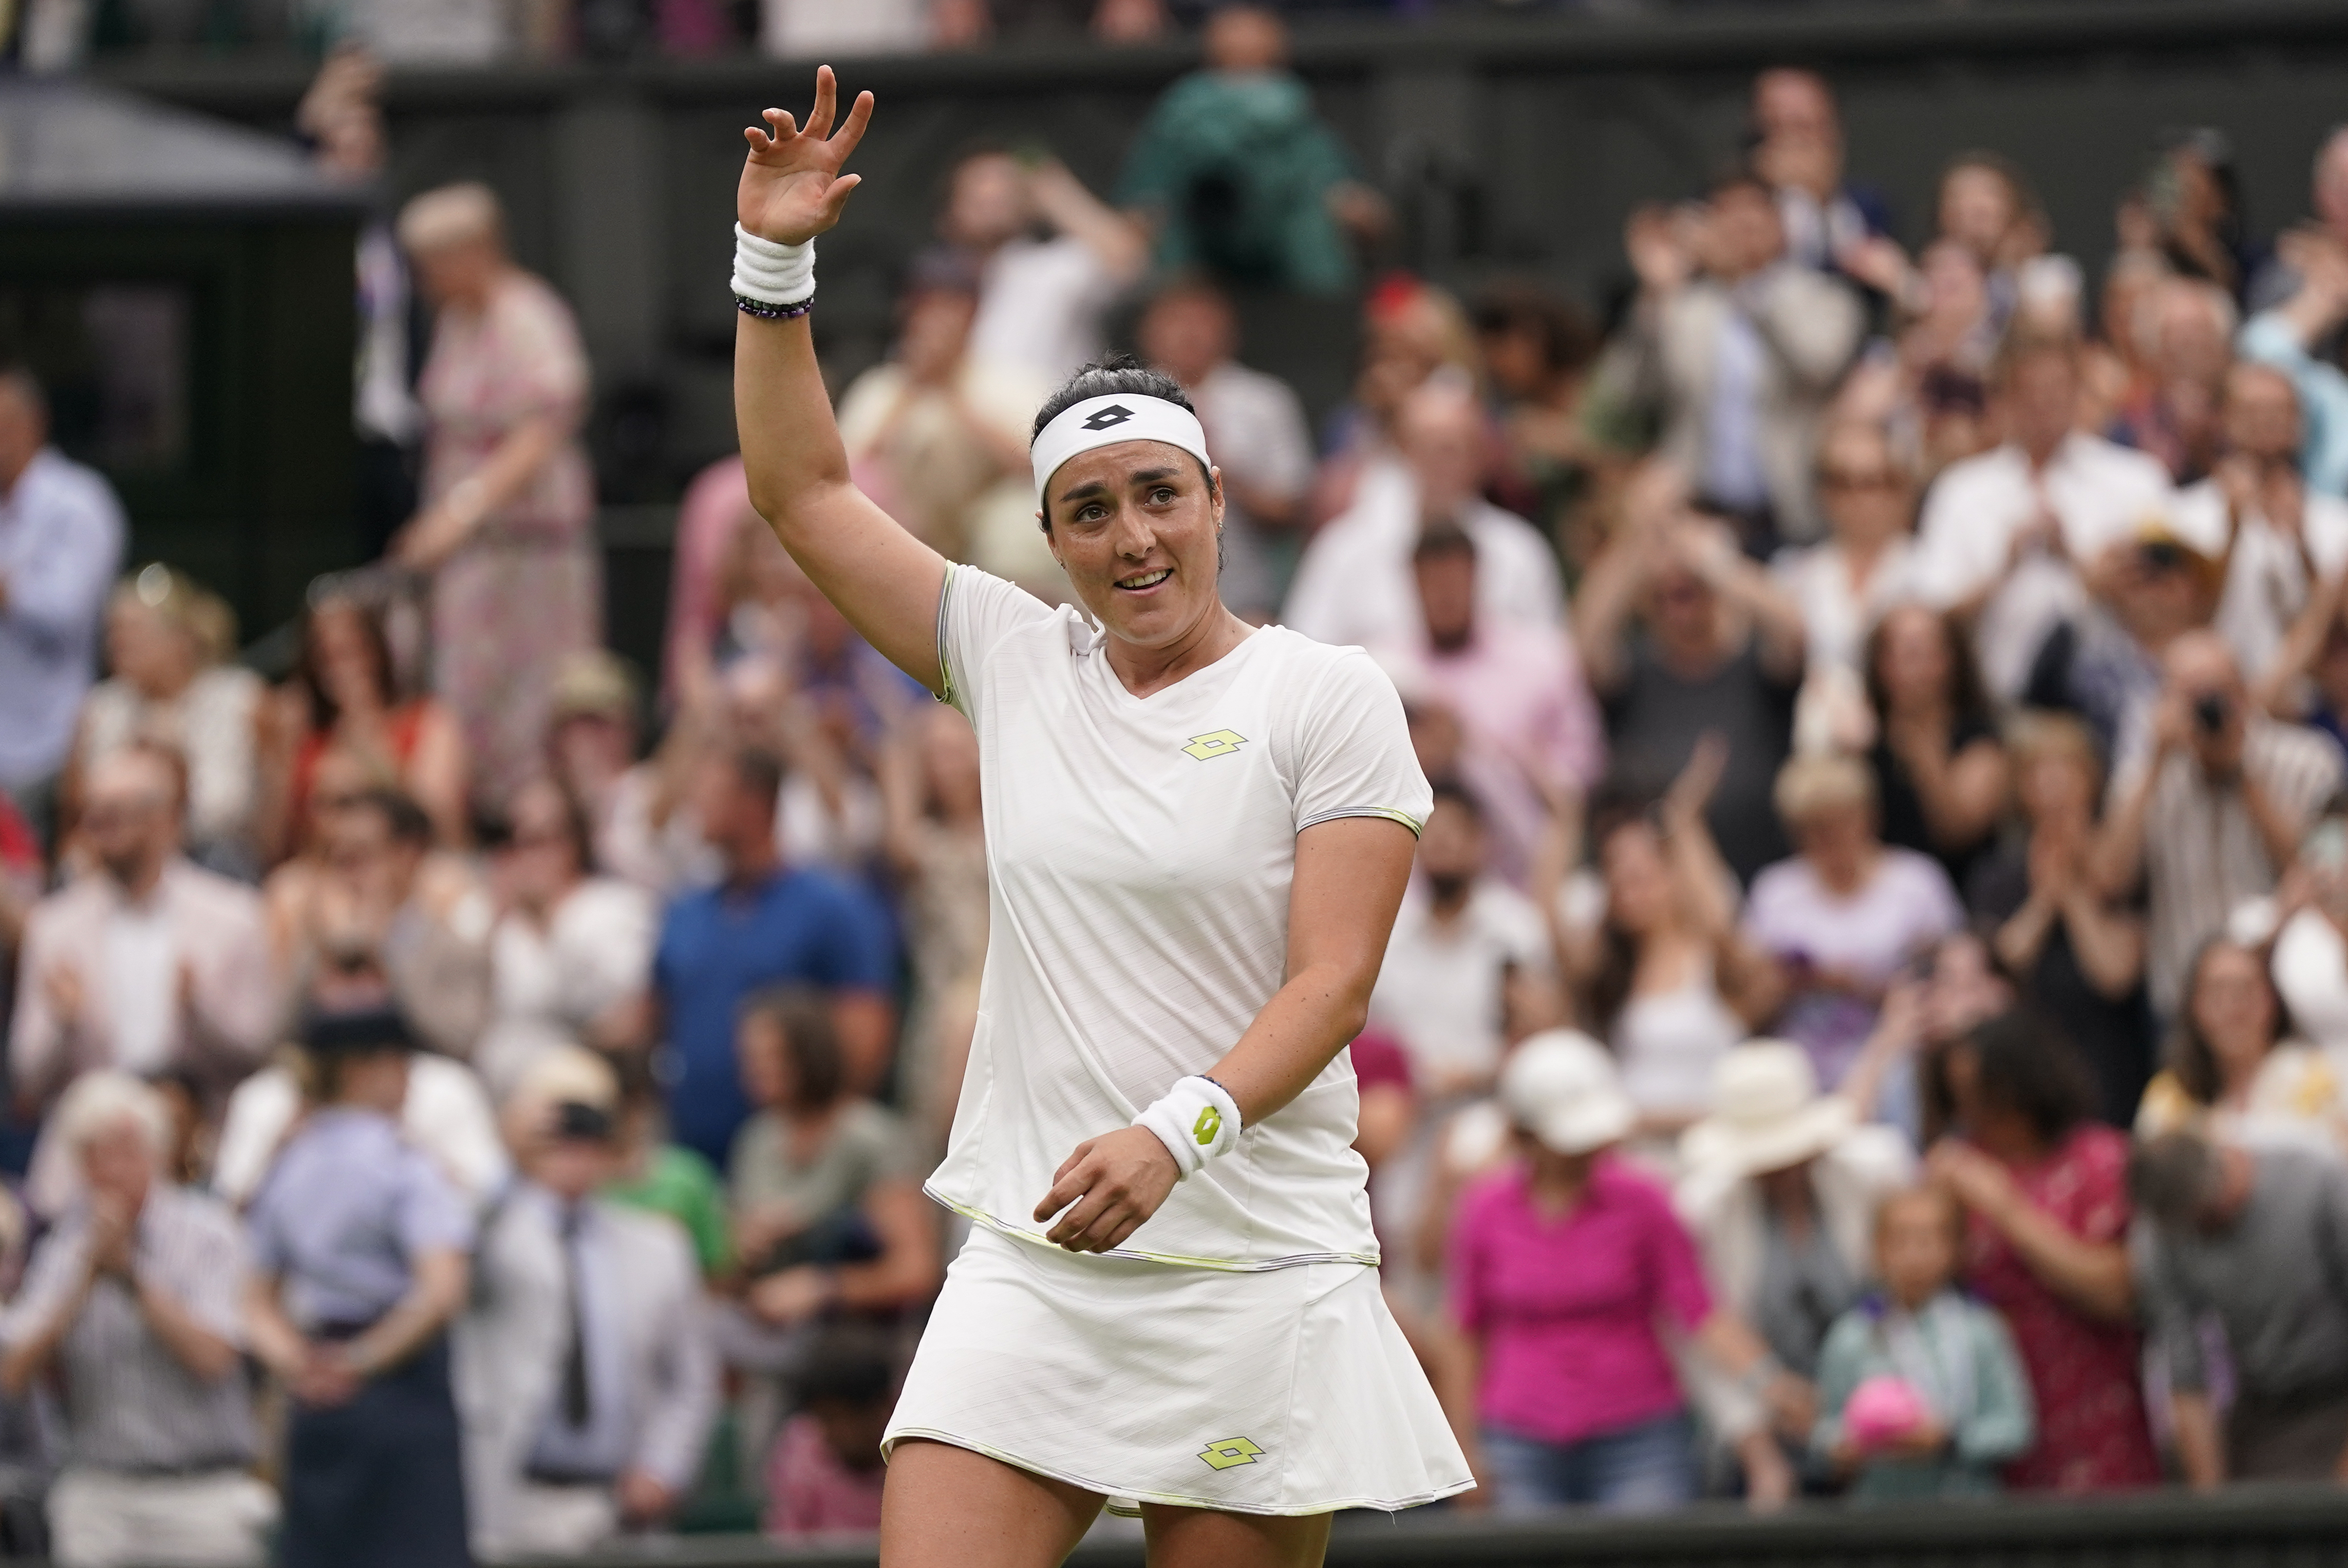 Wimbledon finalists Ons Jabeur or Marketa Vondrousova set to win first Grand Slam title